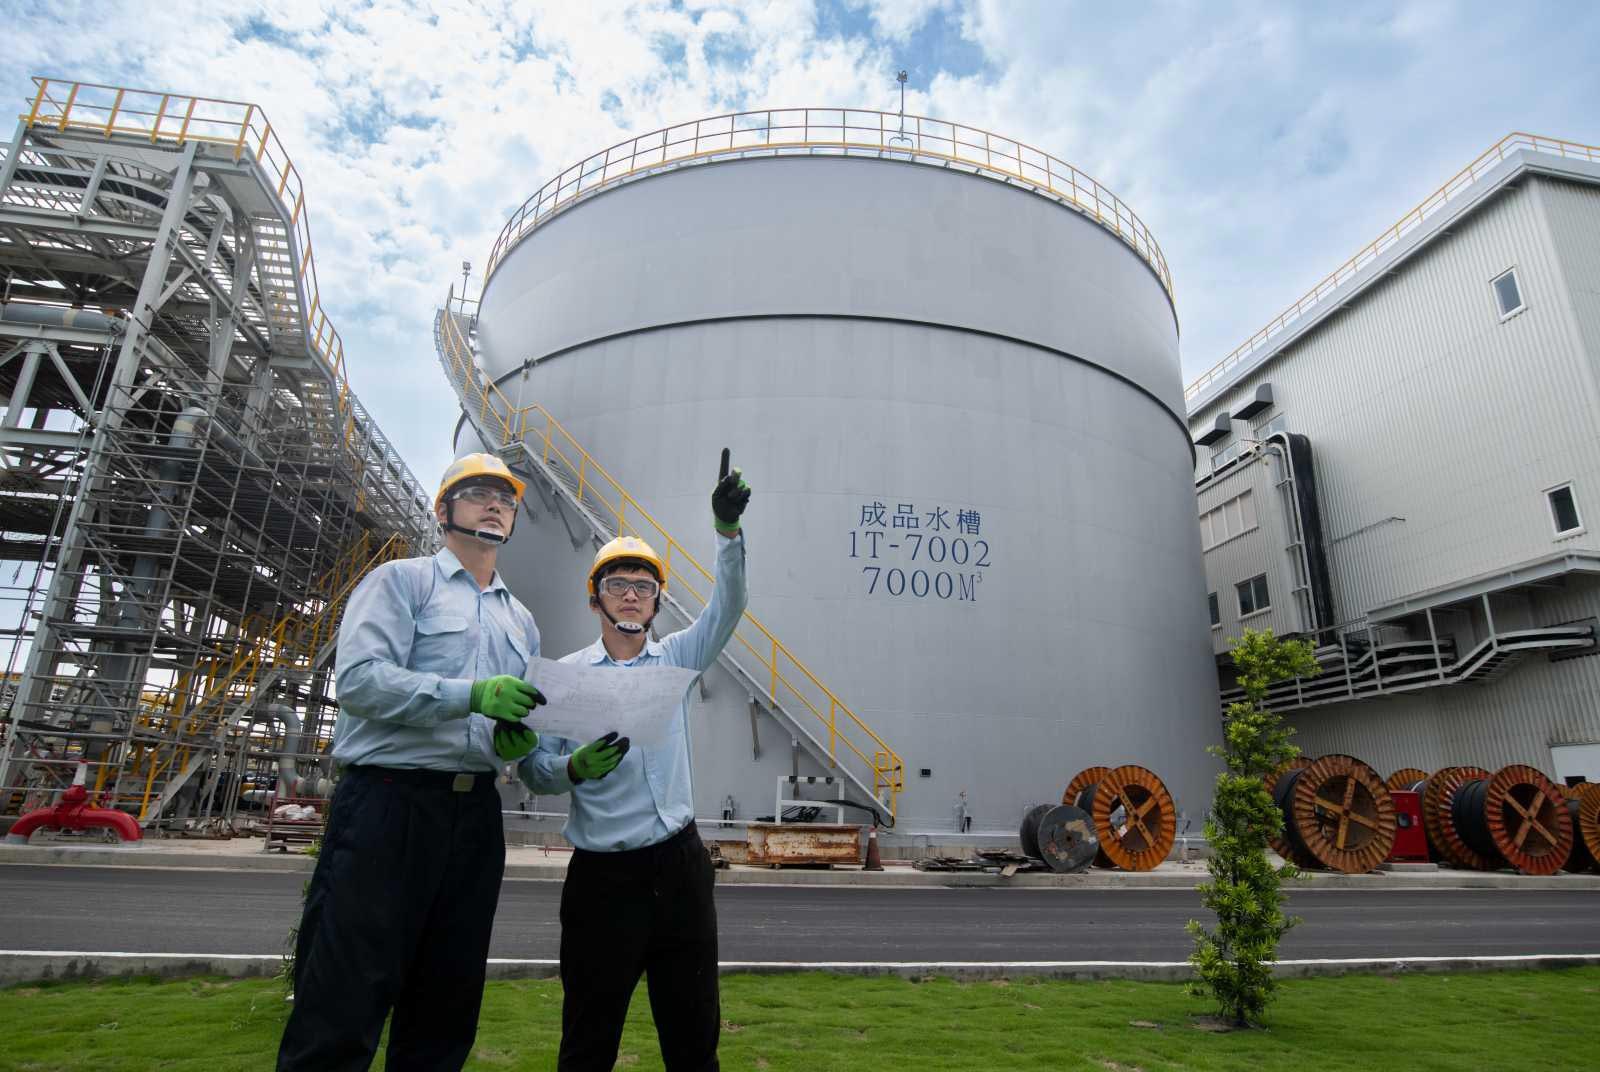 Why did Formosa Plastics build its own desalination facility?